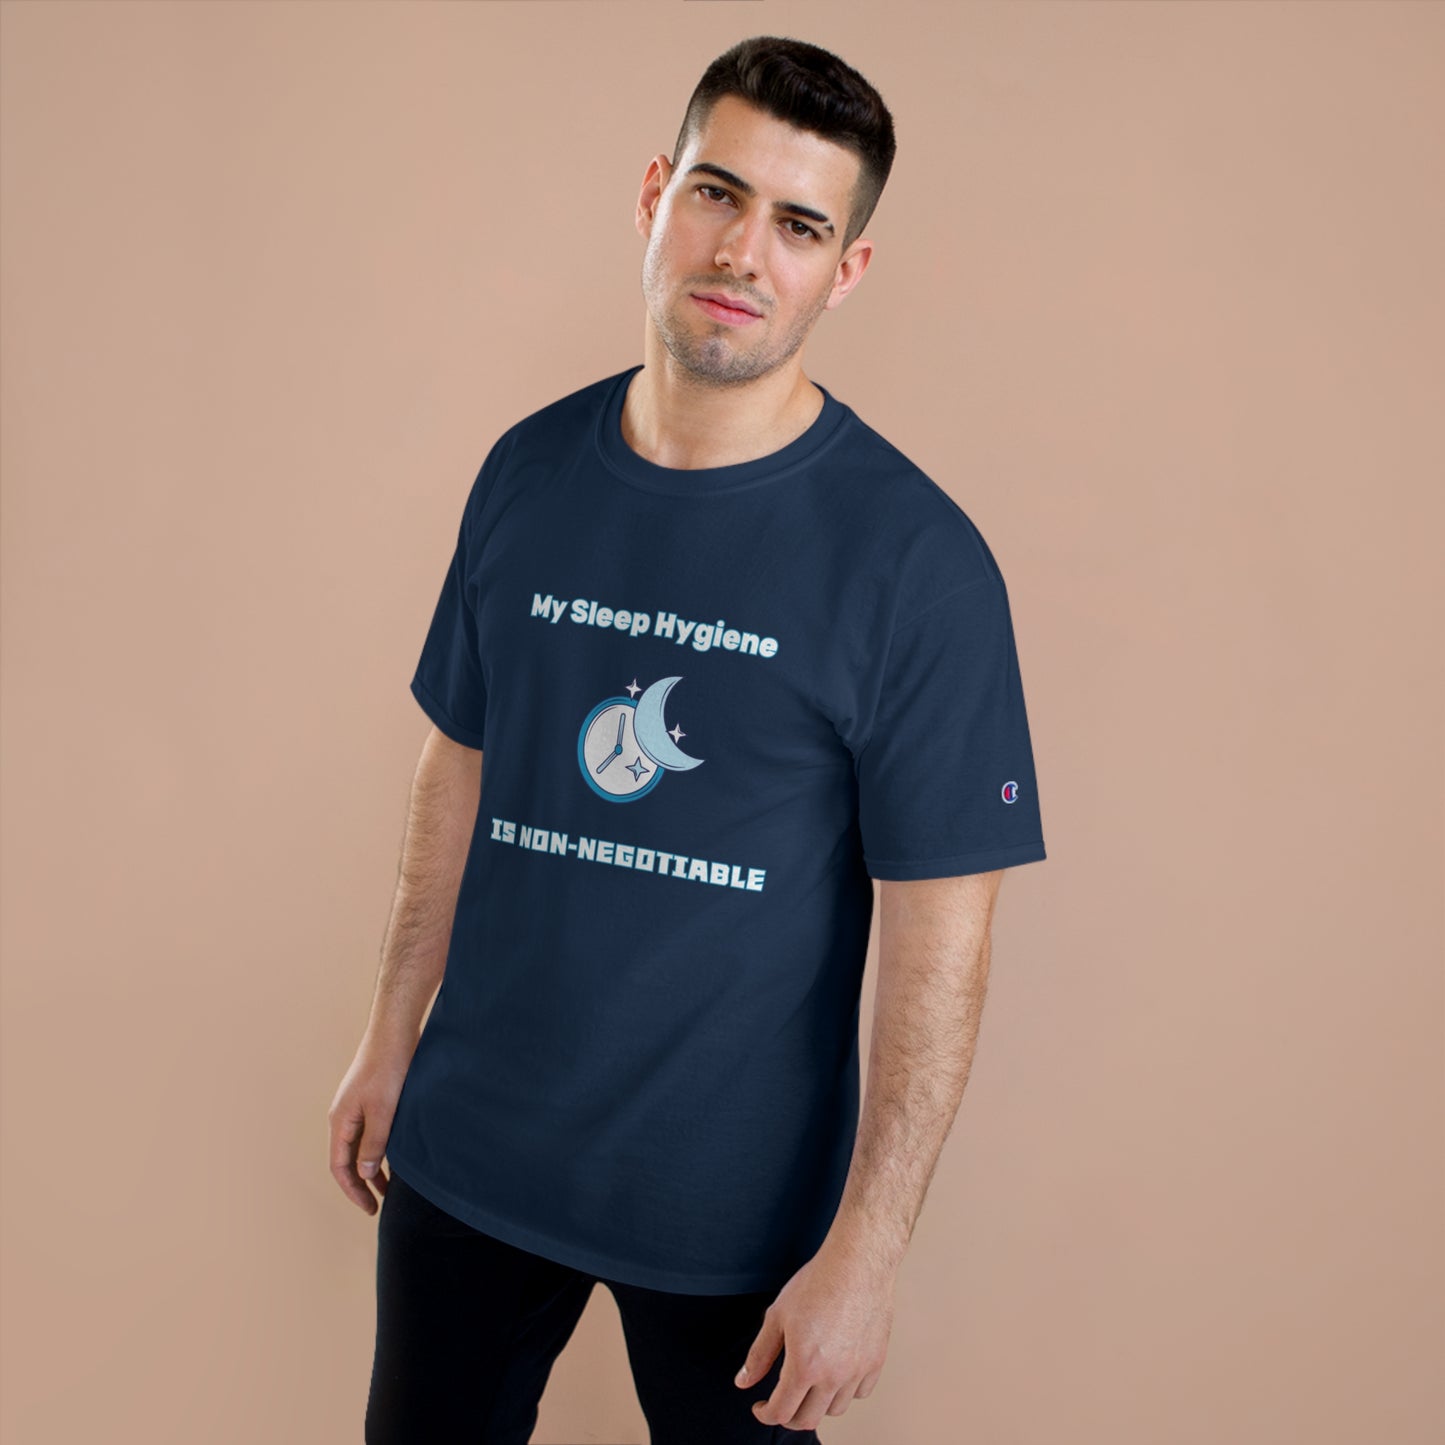 "My Sleep Hygiene is Non-Negotiable" Champion Men's T-Shirt